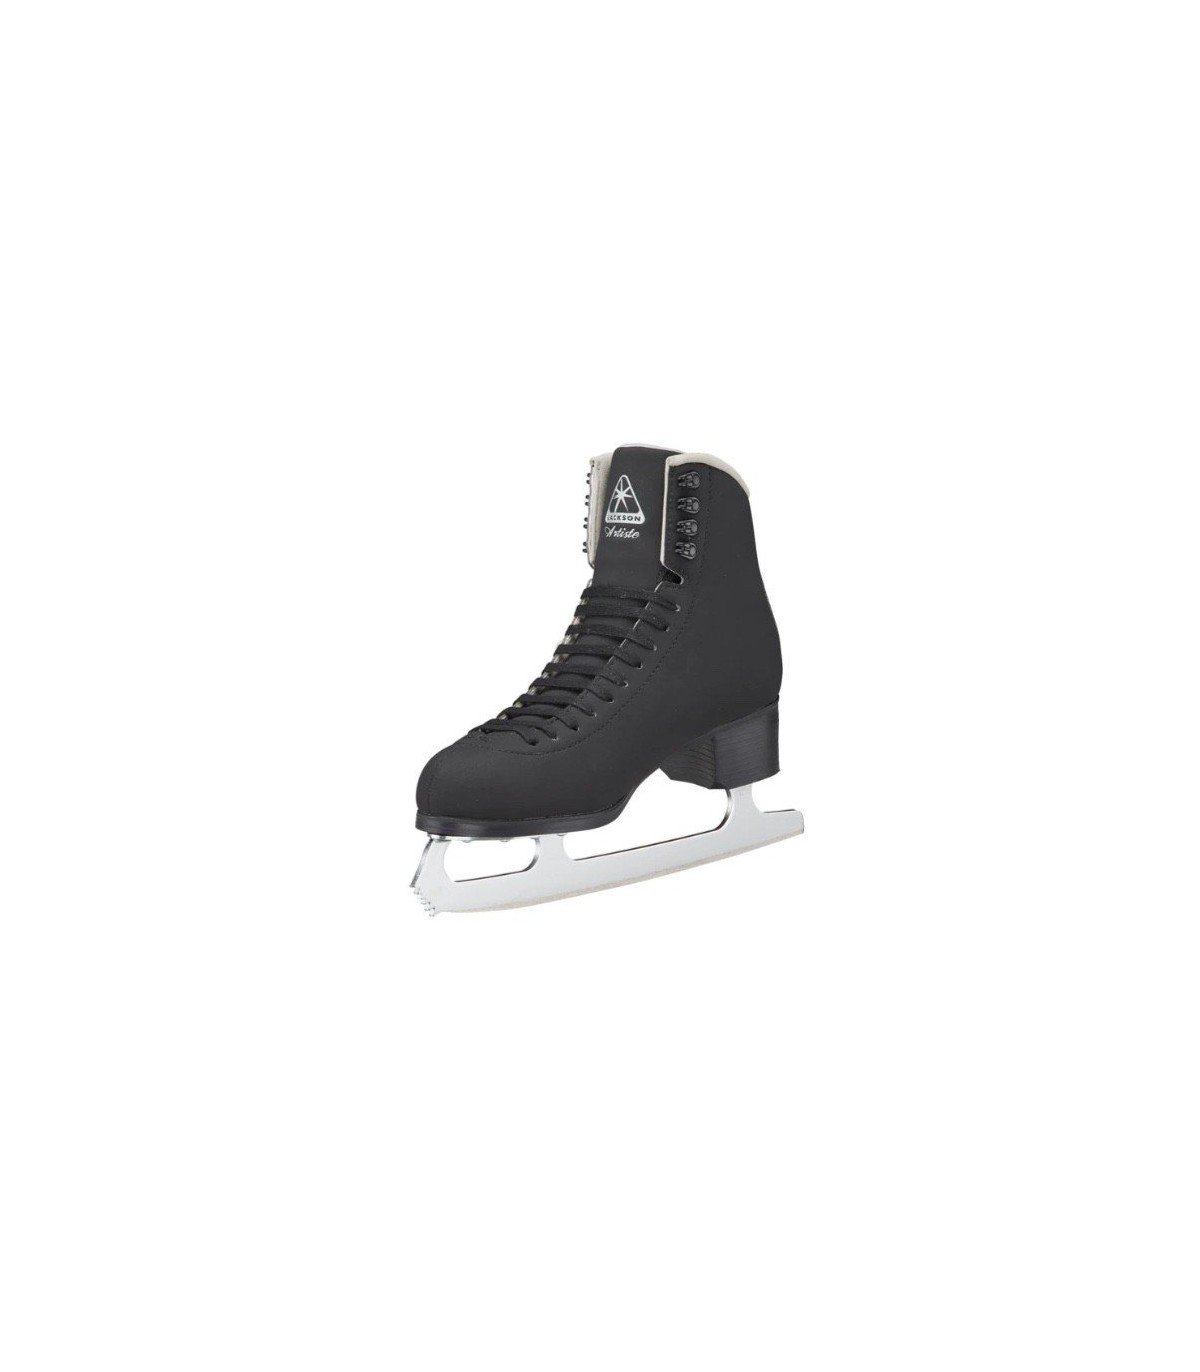 Jackson Ultima Figure Skates js1790? Ice Artiste カラー:ホワイト 通販 